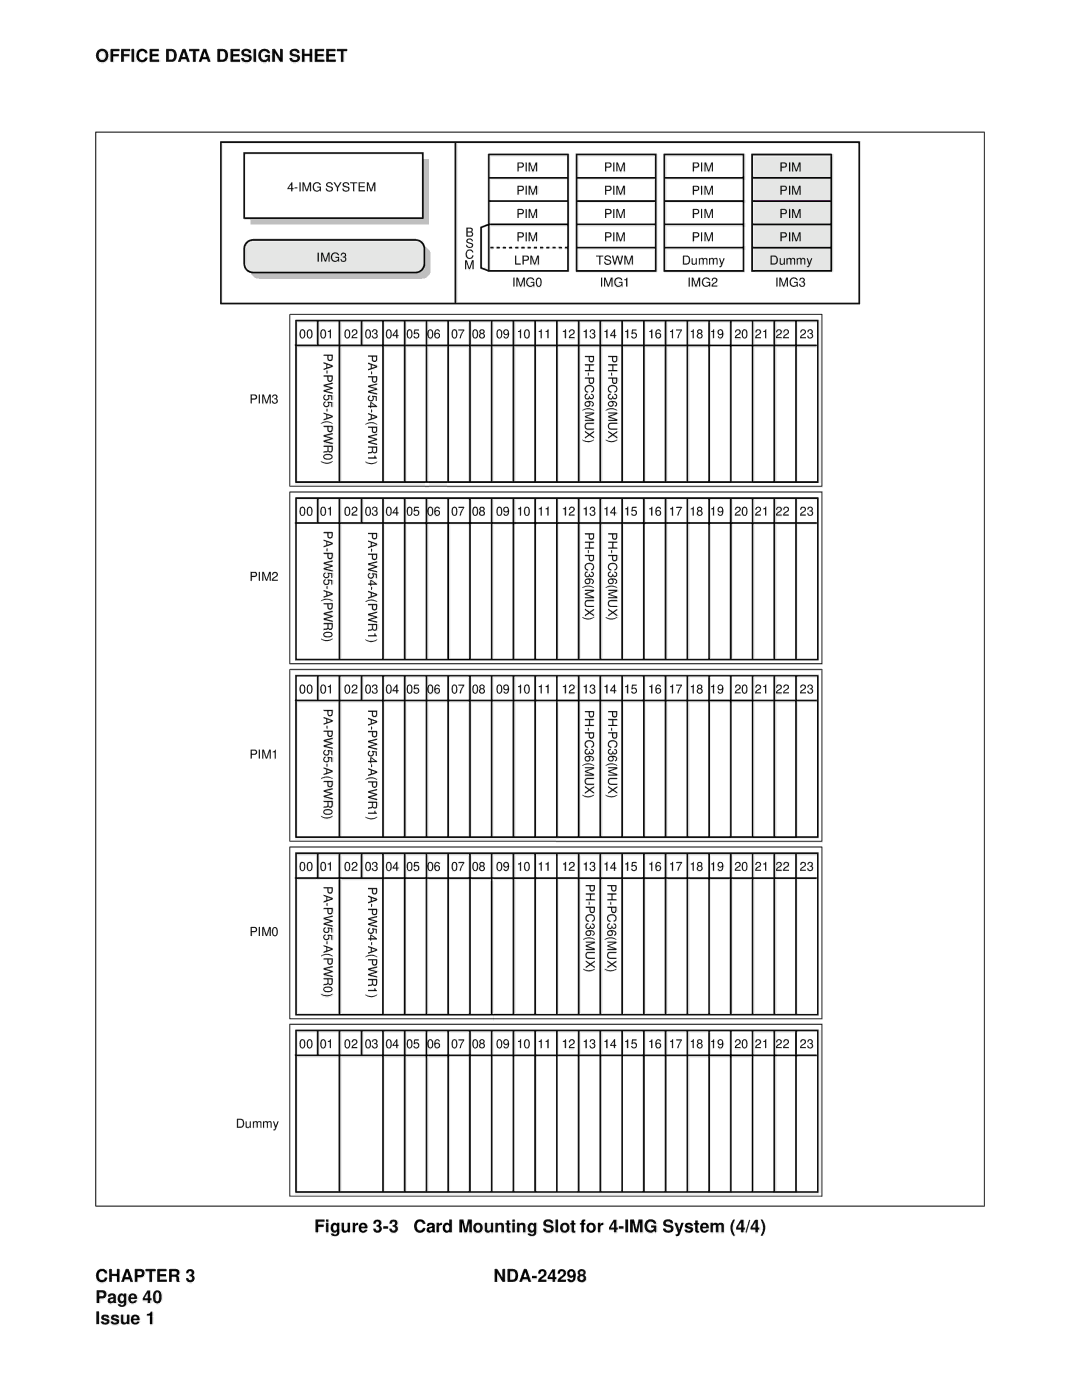 NEC NDA-24298 manual Card Mounting Slot for 4-IMG System 4/4 